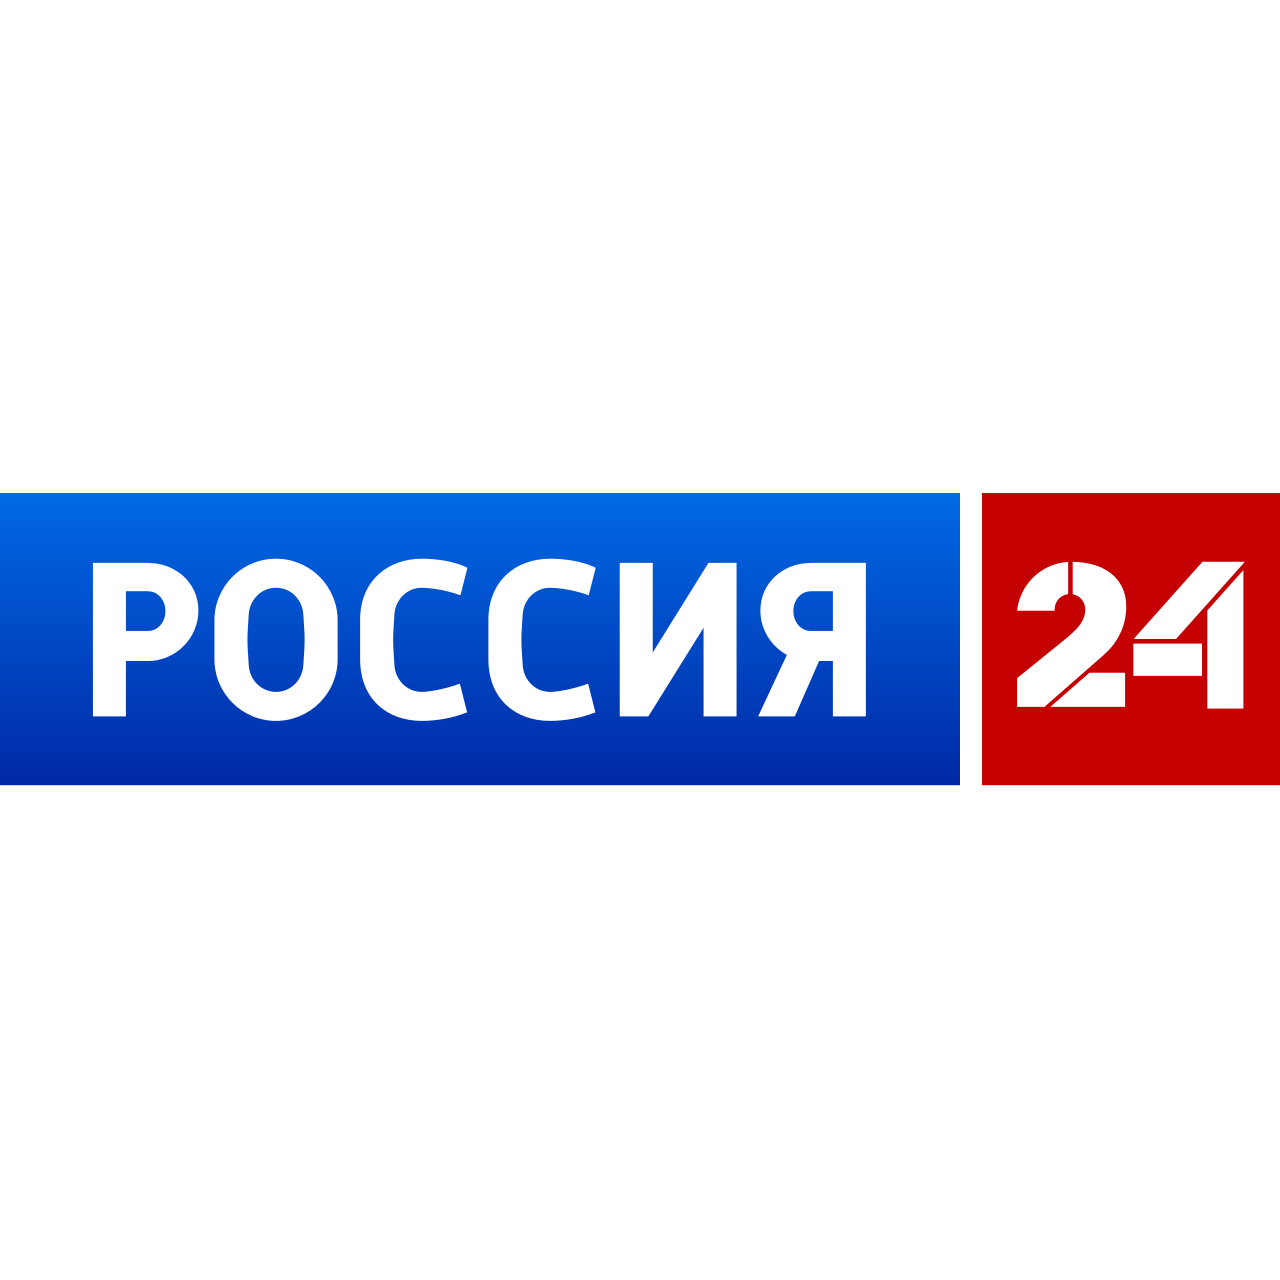 Россия 1 live. Канал Россия 1. Логотип телеканала Россия 24. Знак канала Россия 1.